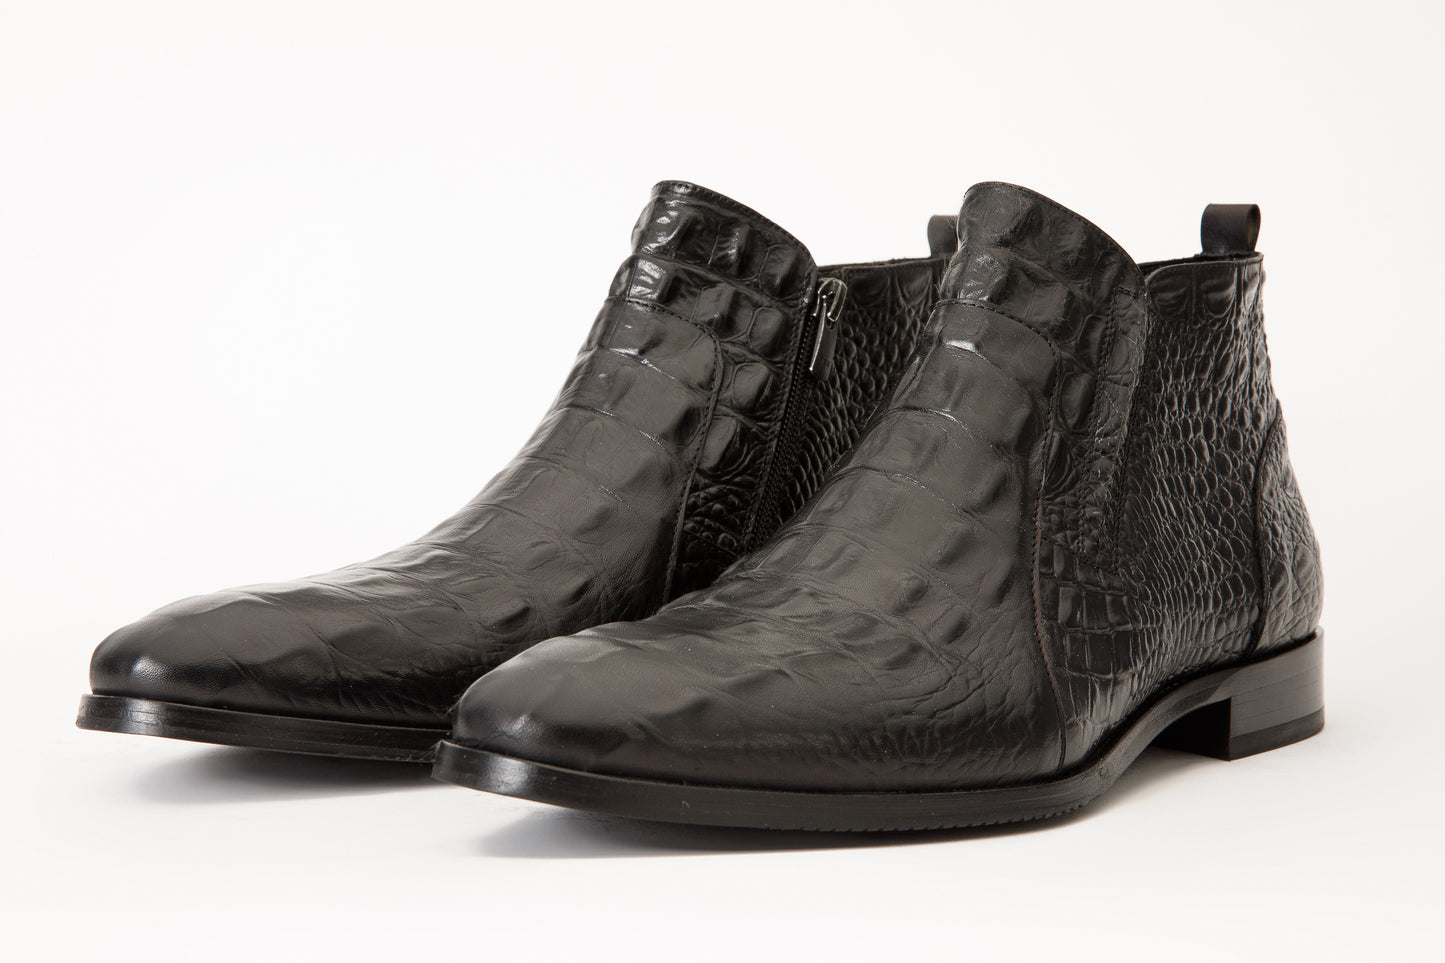 The Randor Black Leather Side-Zip Dress Ankle Men Boot